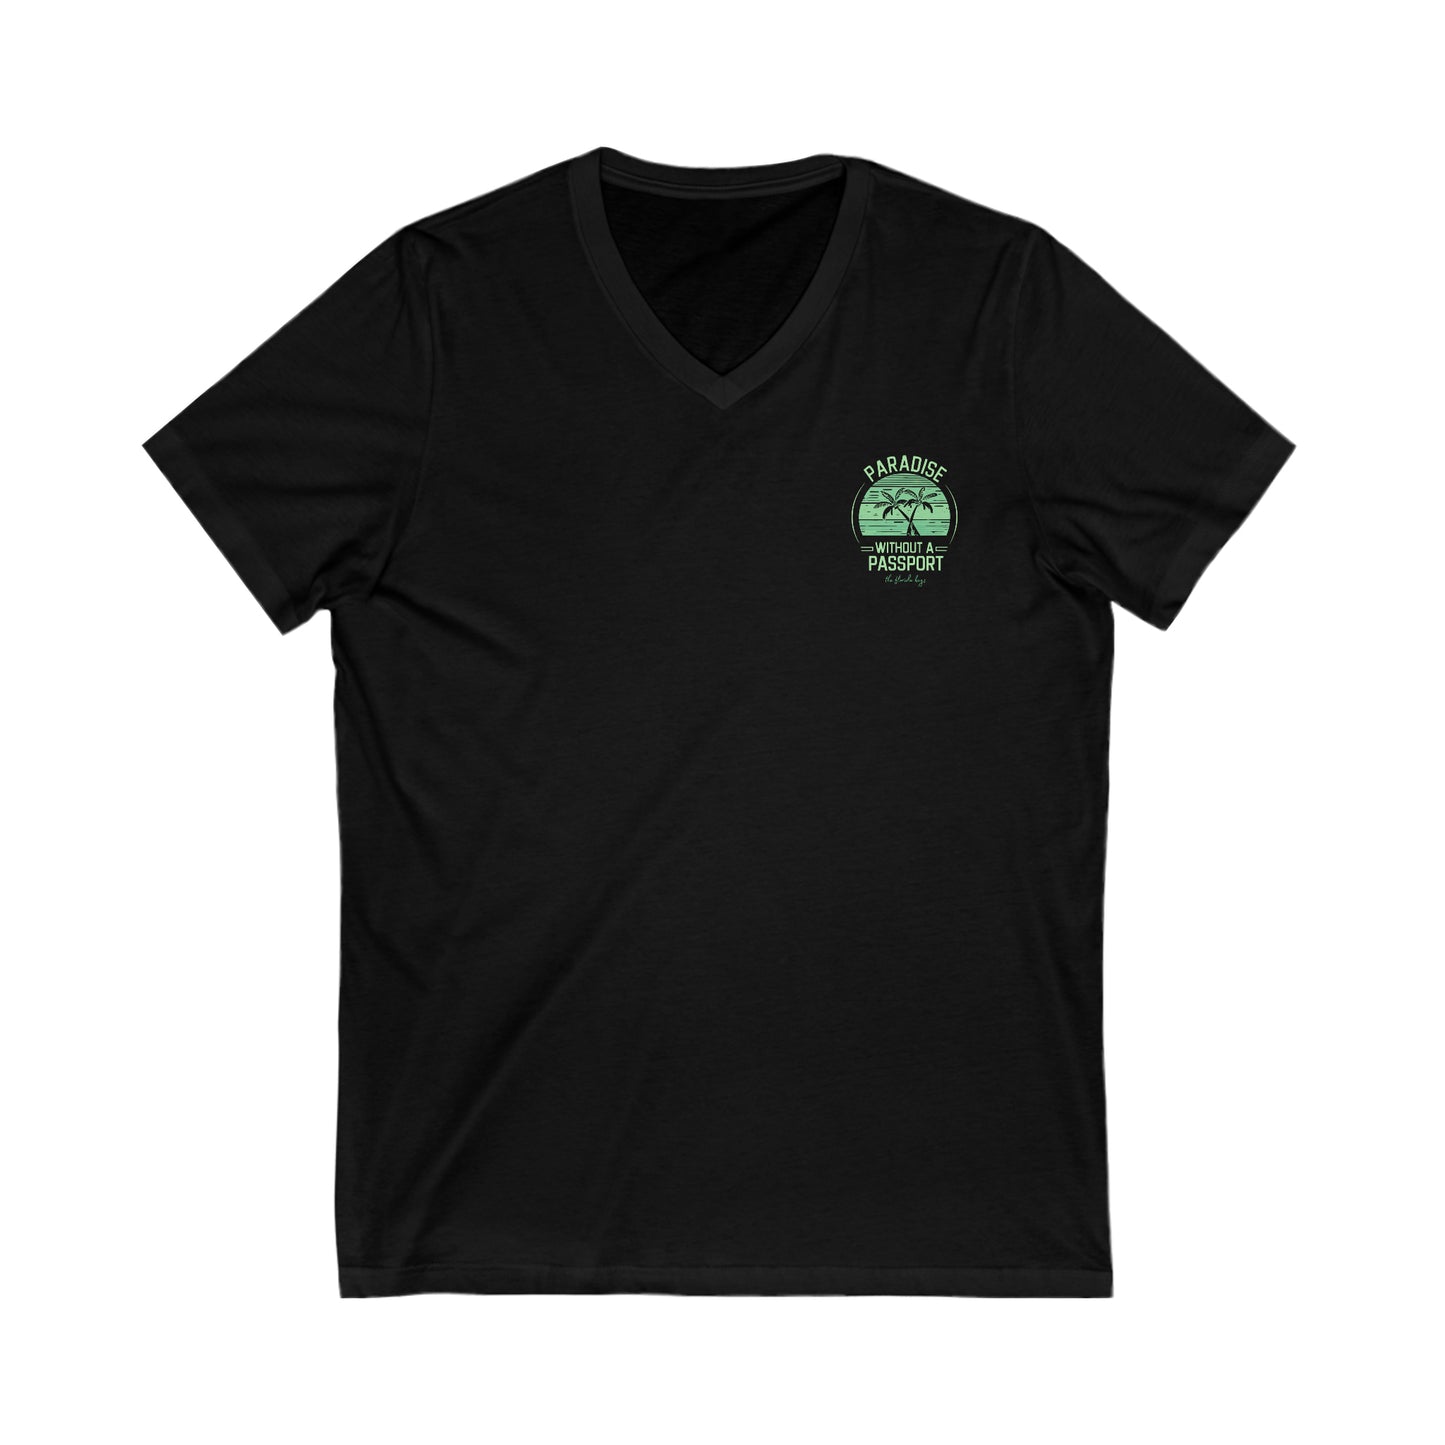 Florida keys vneck tshirt - green - womens tee - vneck shirt floirda keys